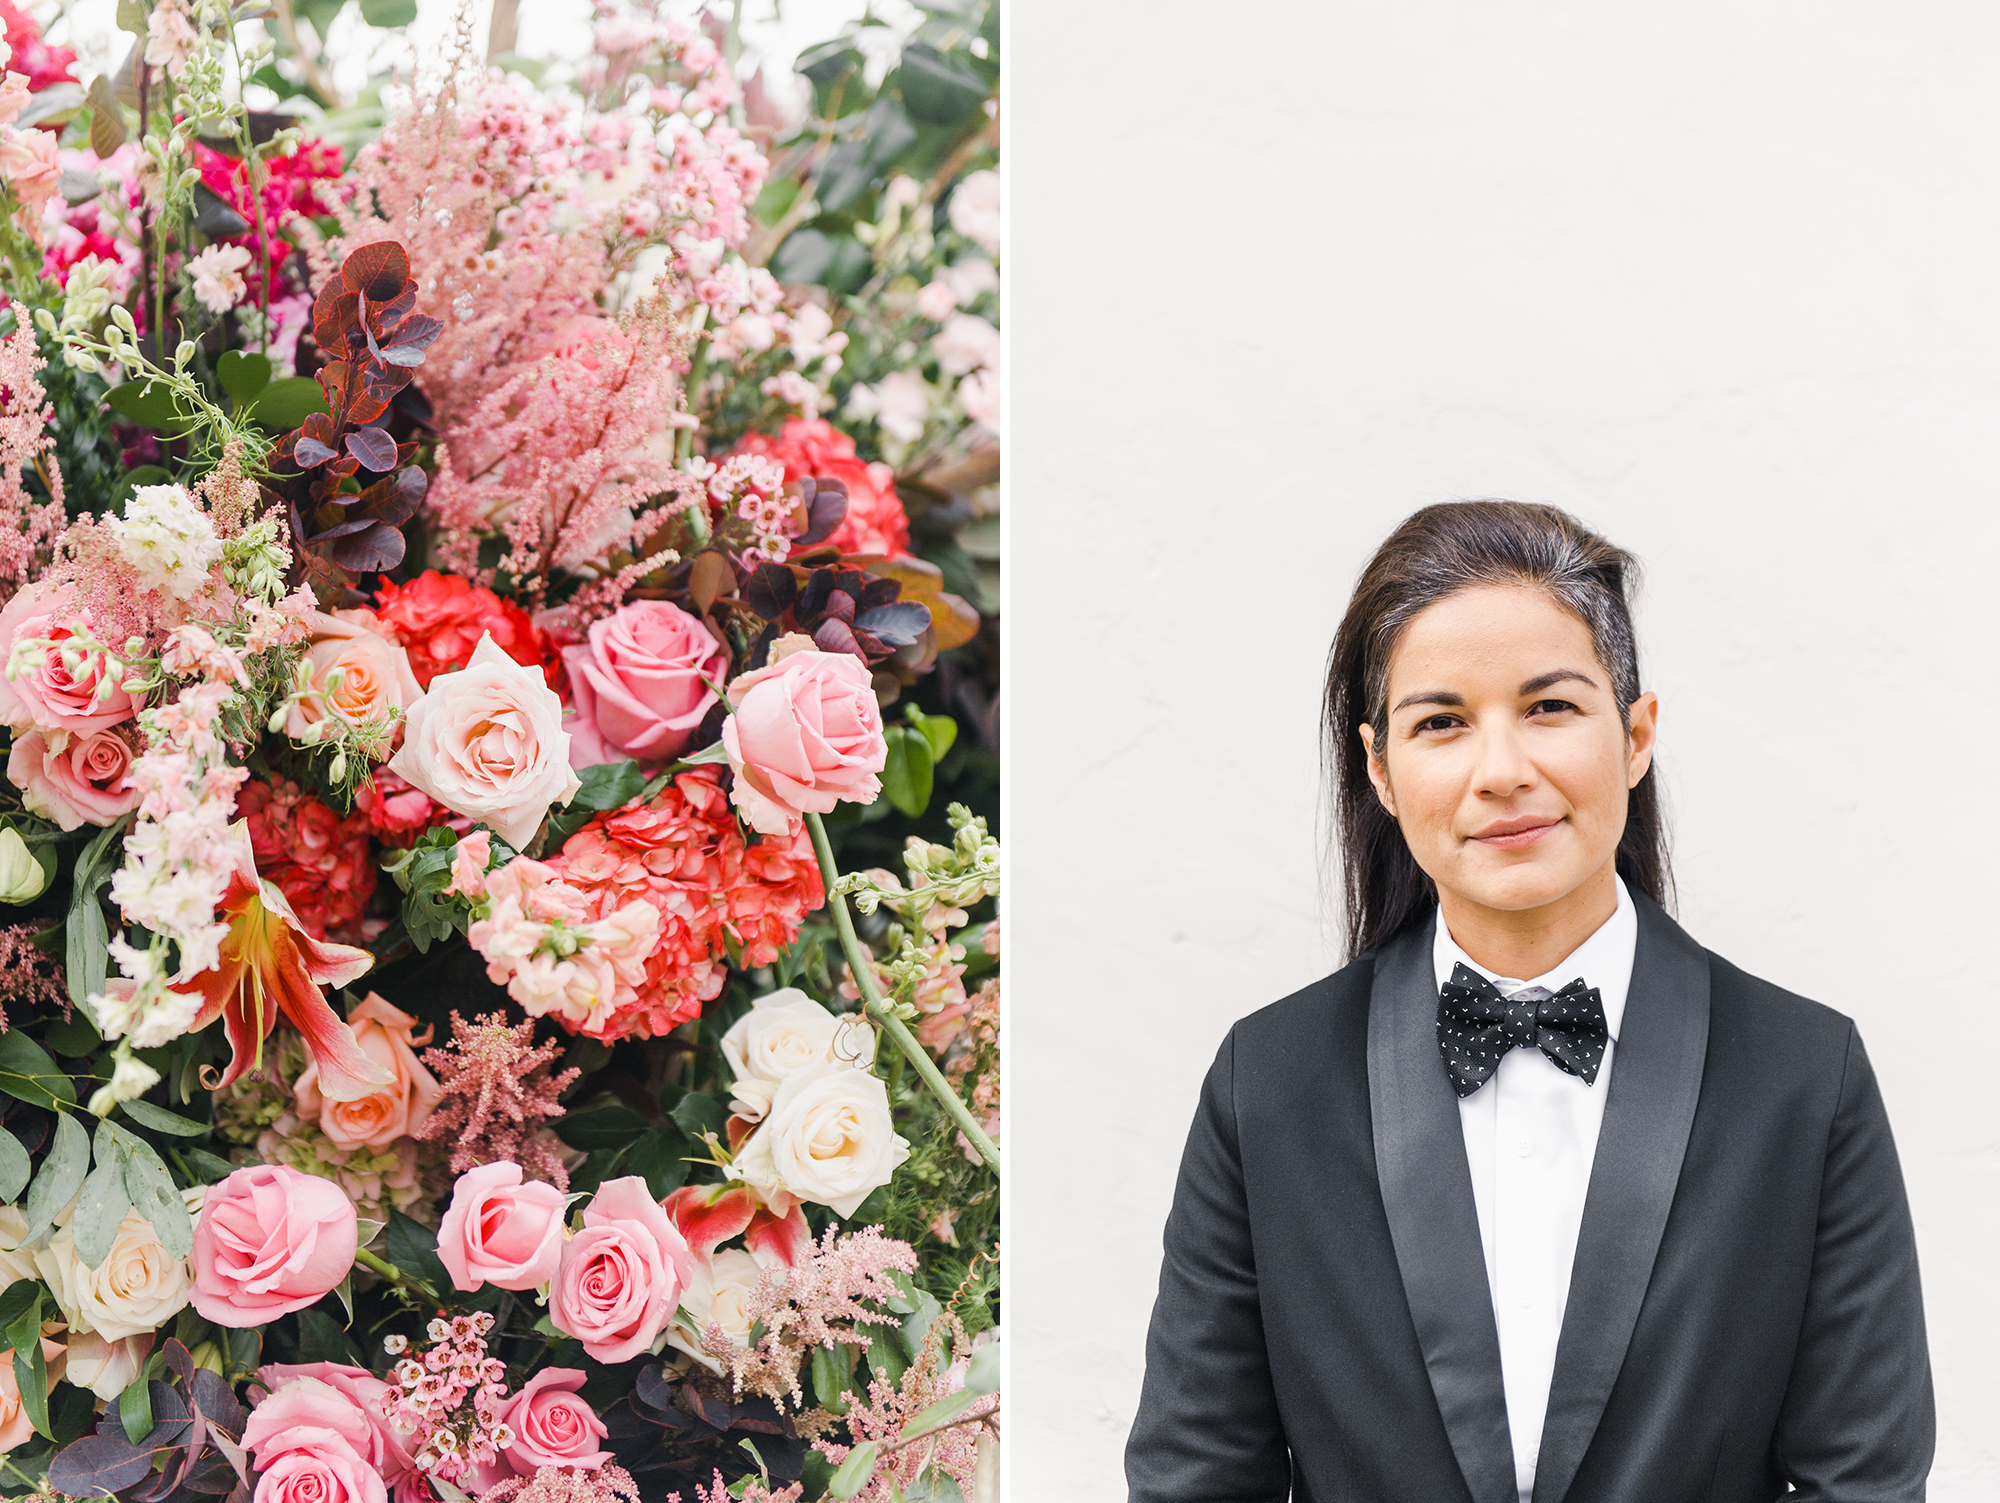 Ceremony florals; bride in suit